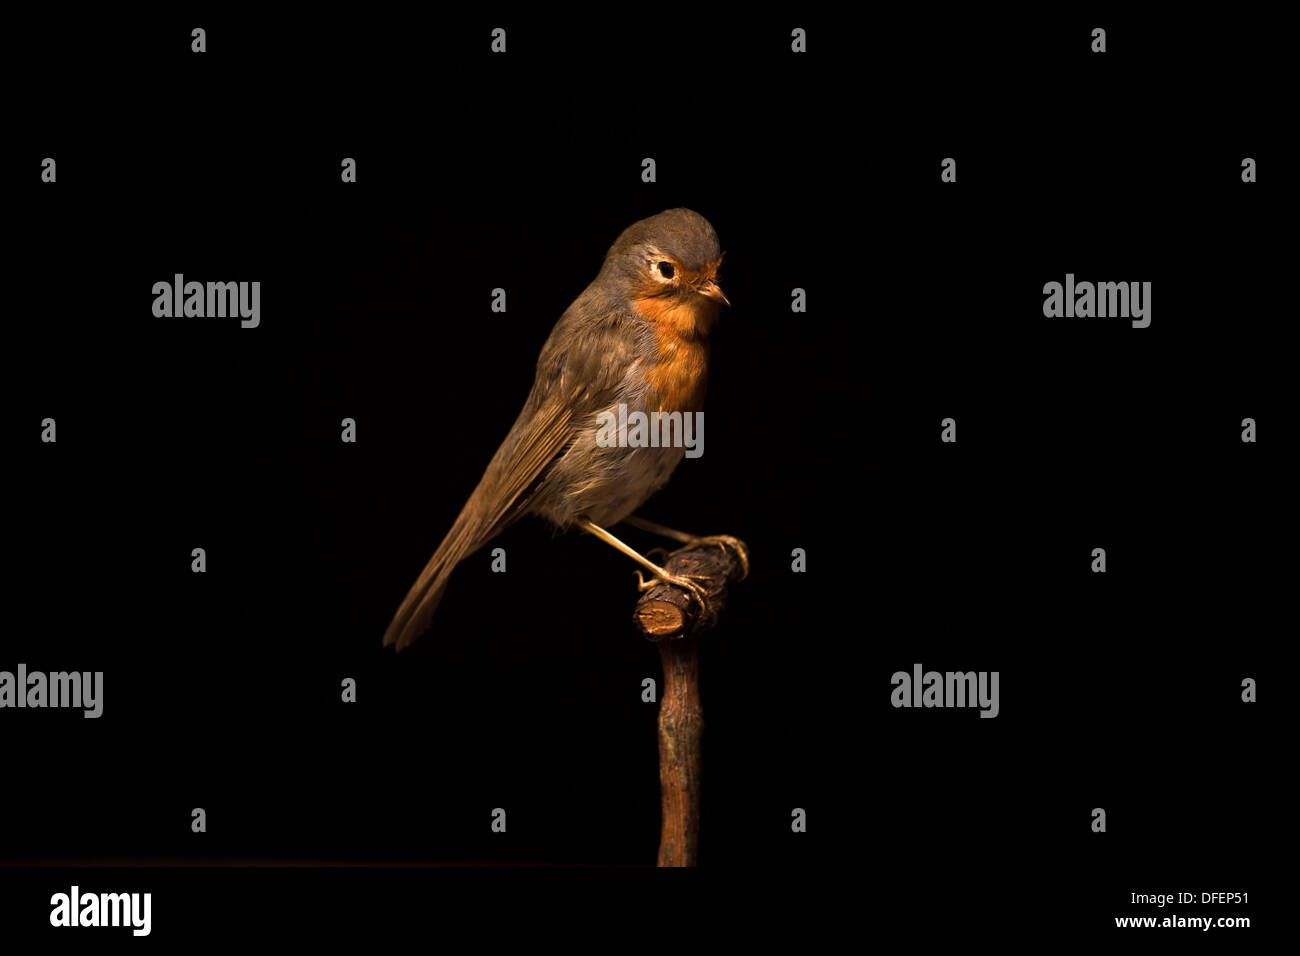 Taxidermy robin on black background Stock Photo